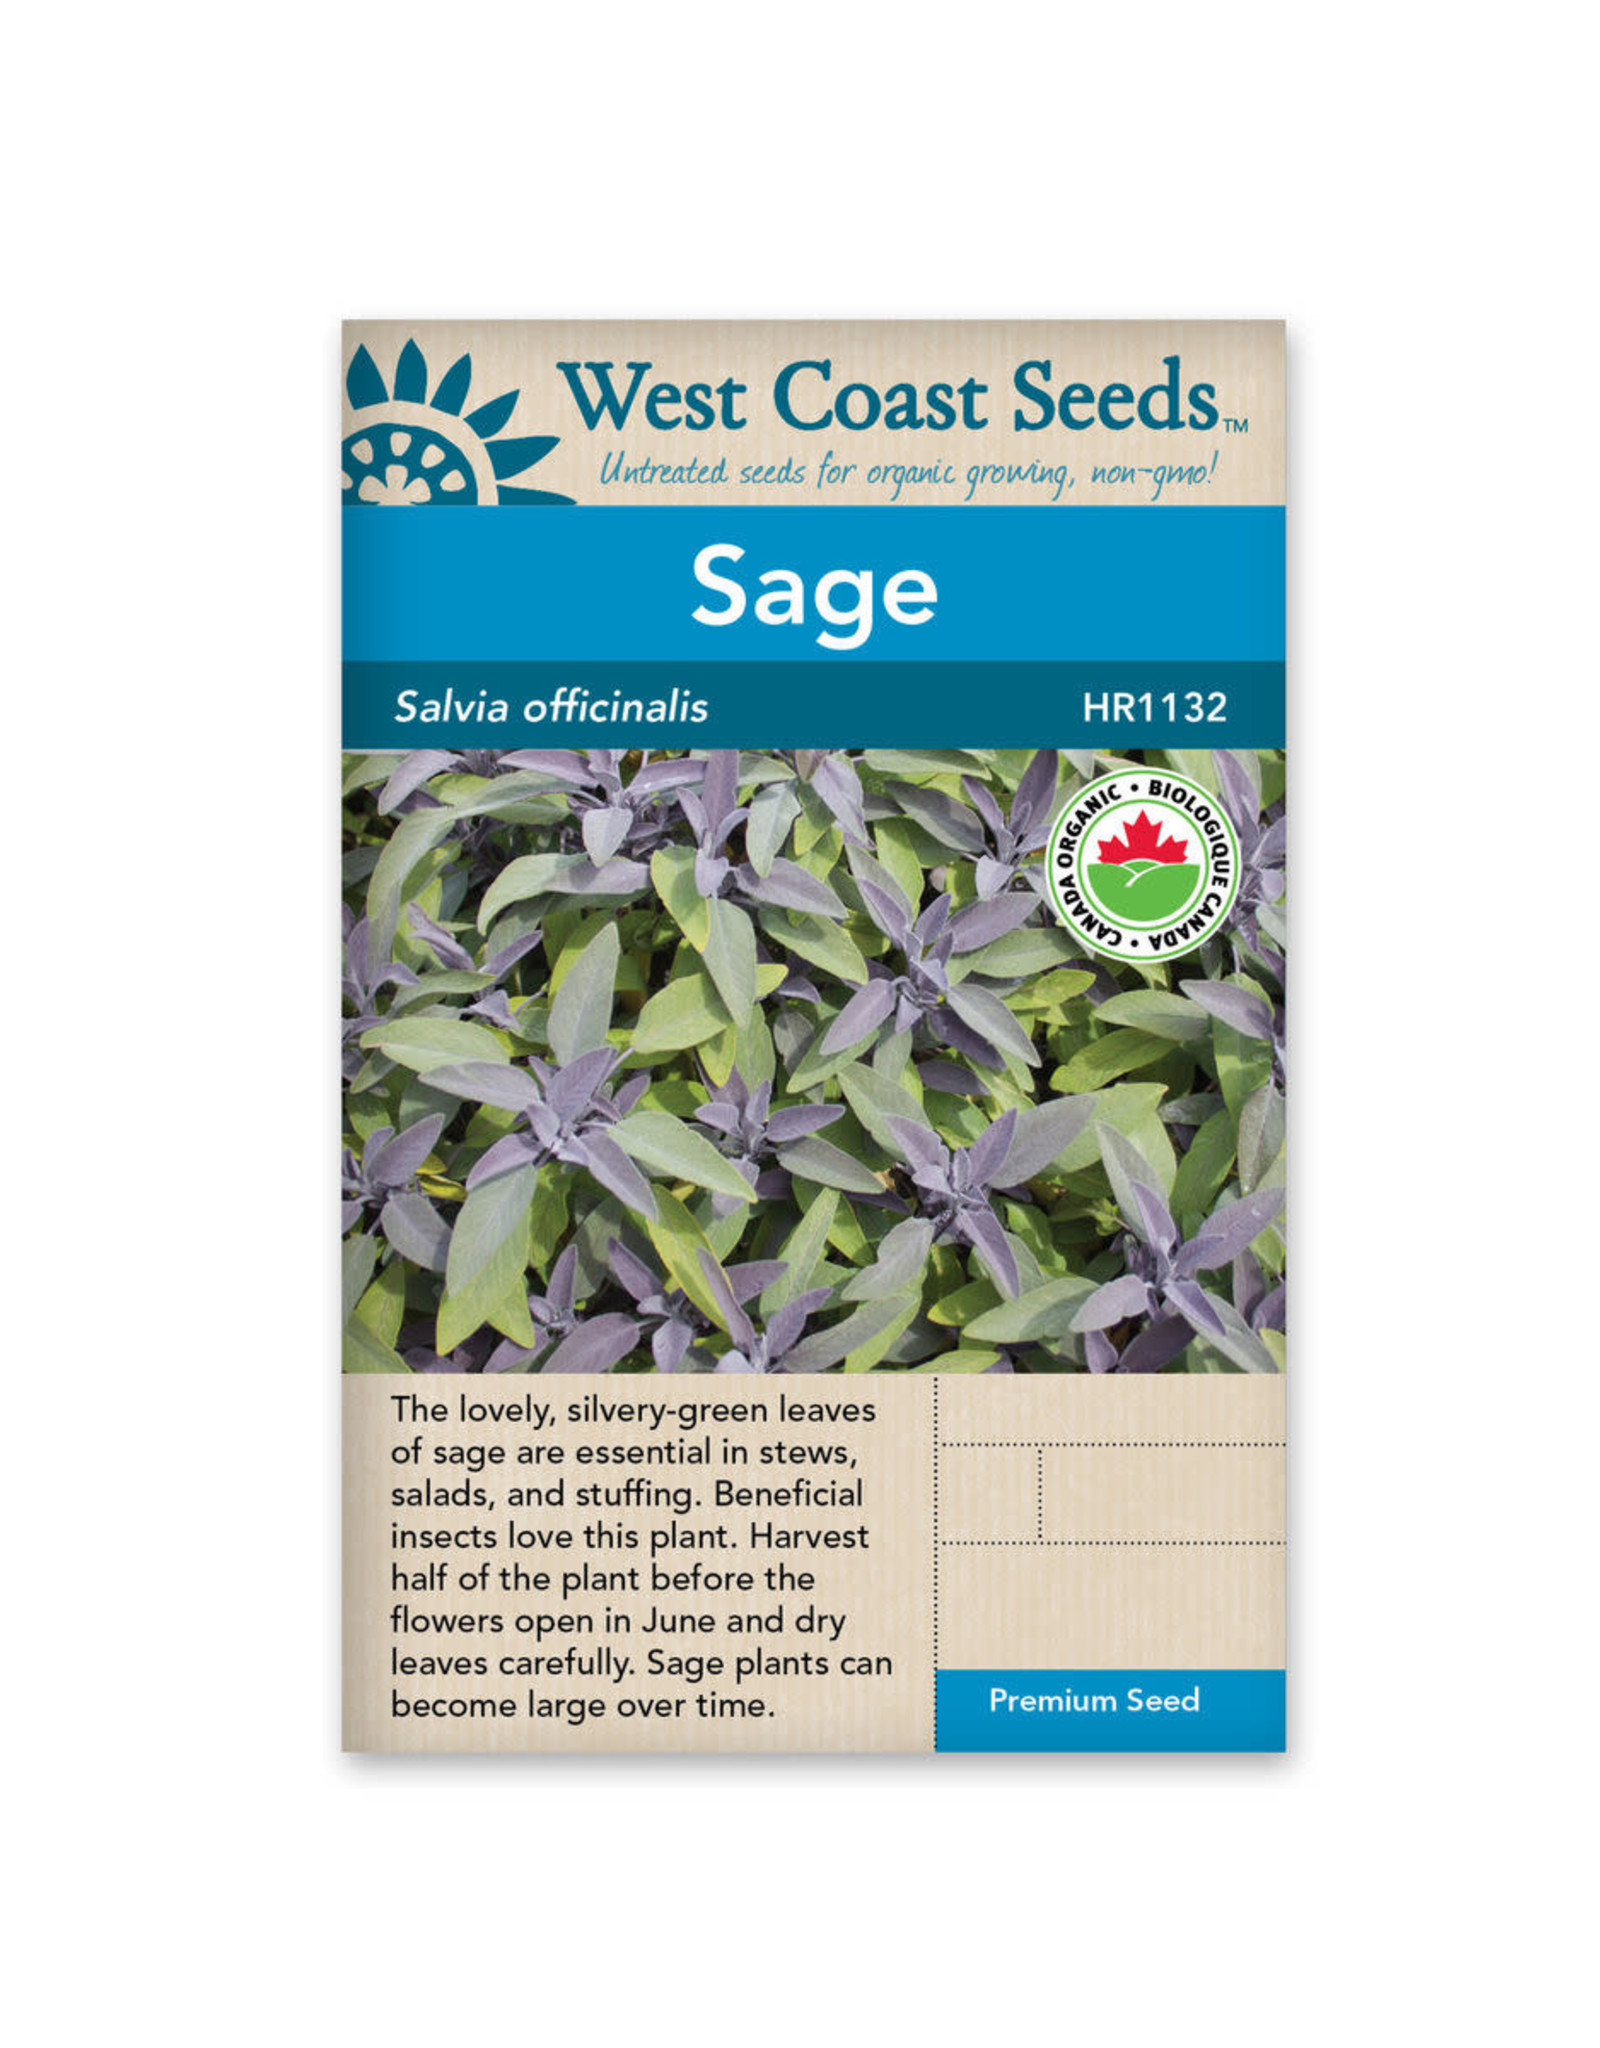 West Coast Seeds Sage Certified Organic